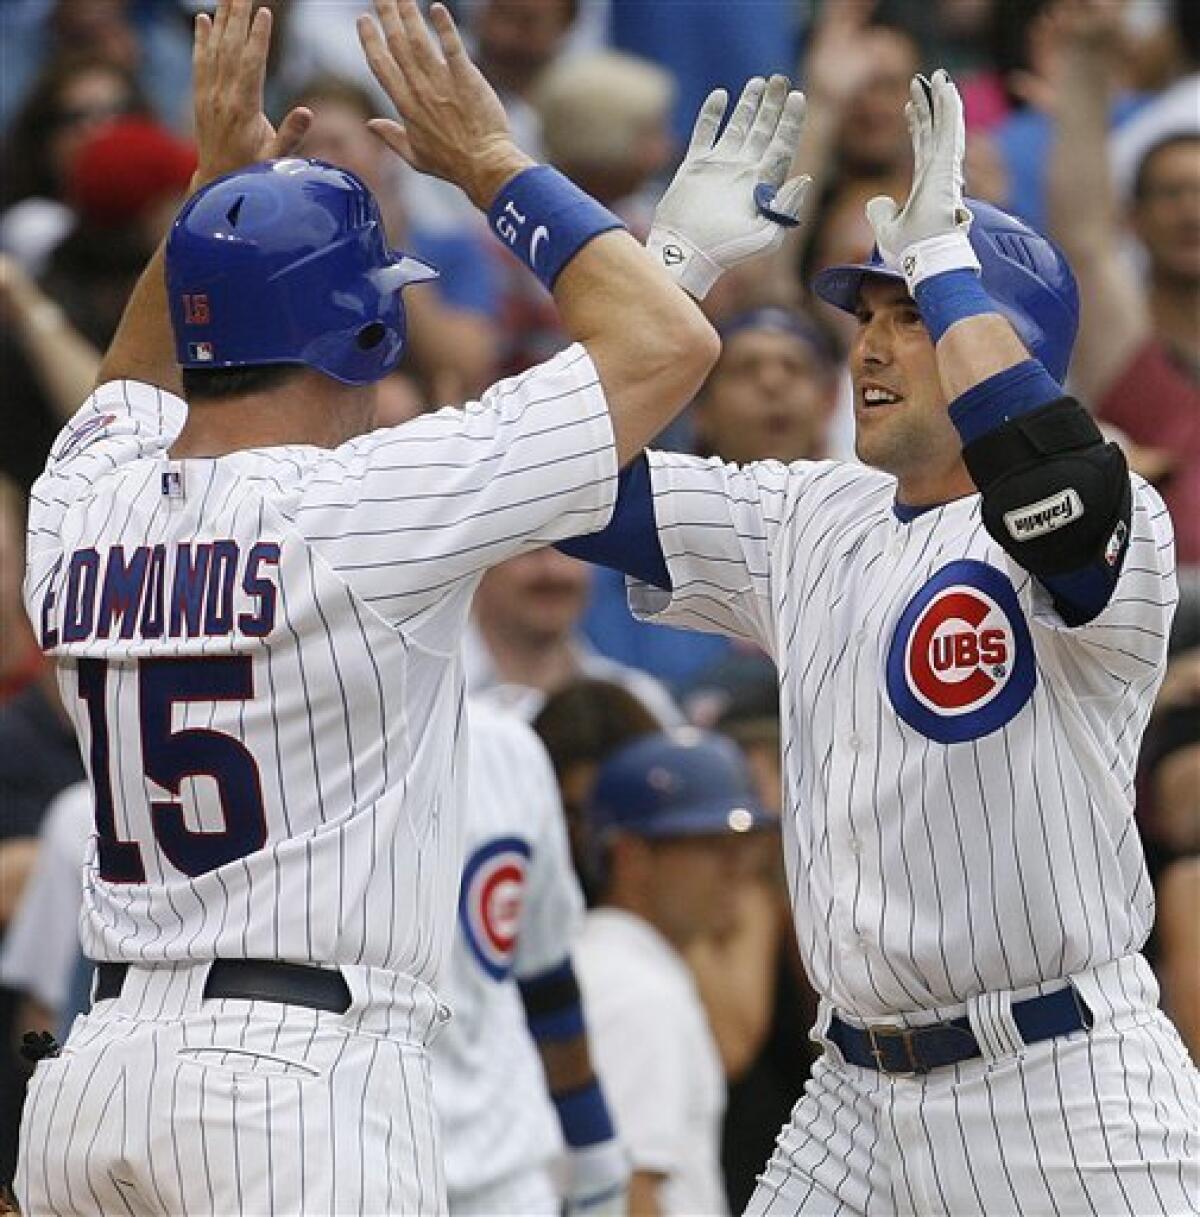 Edmonds helps Cubs rally to beat Rockies - The San Diego Union-Tribune